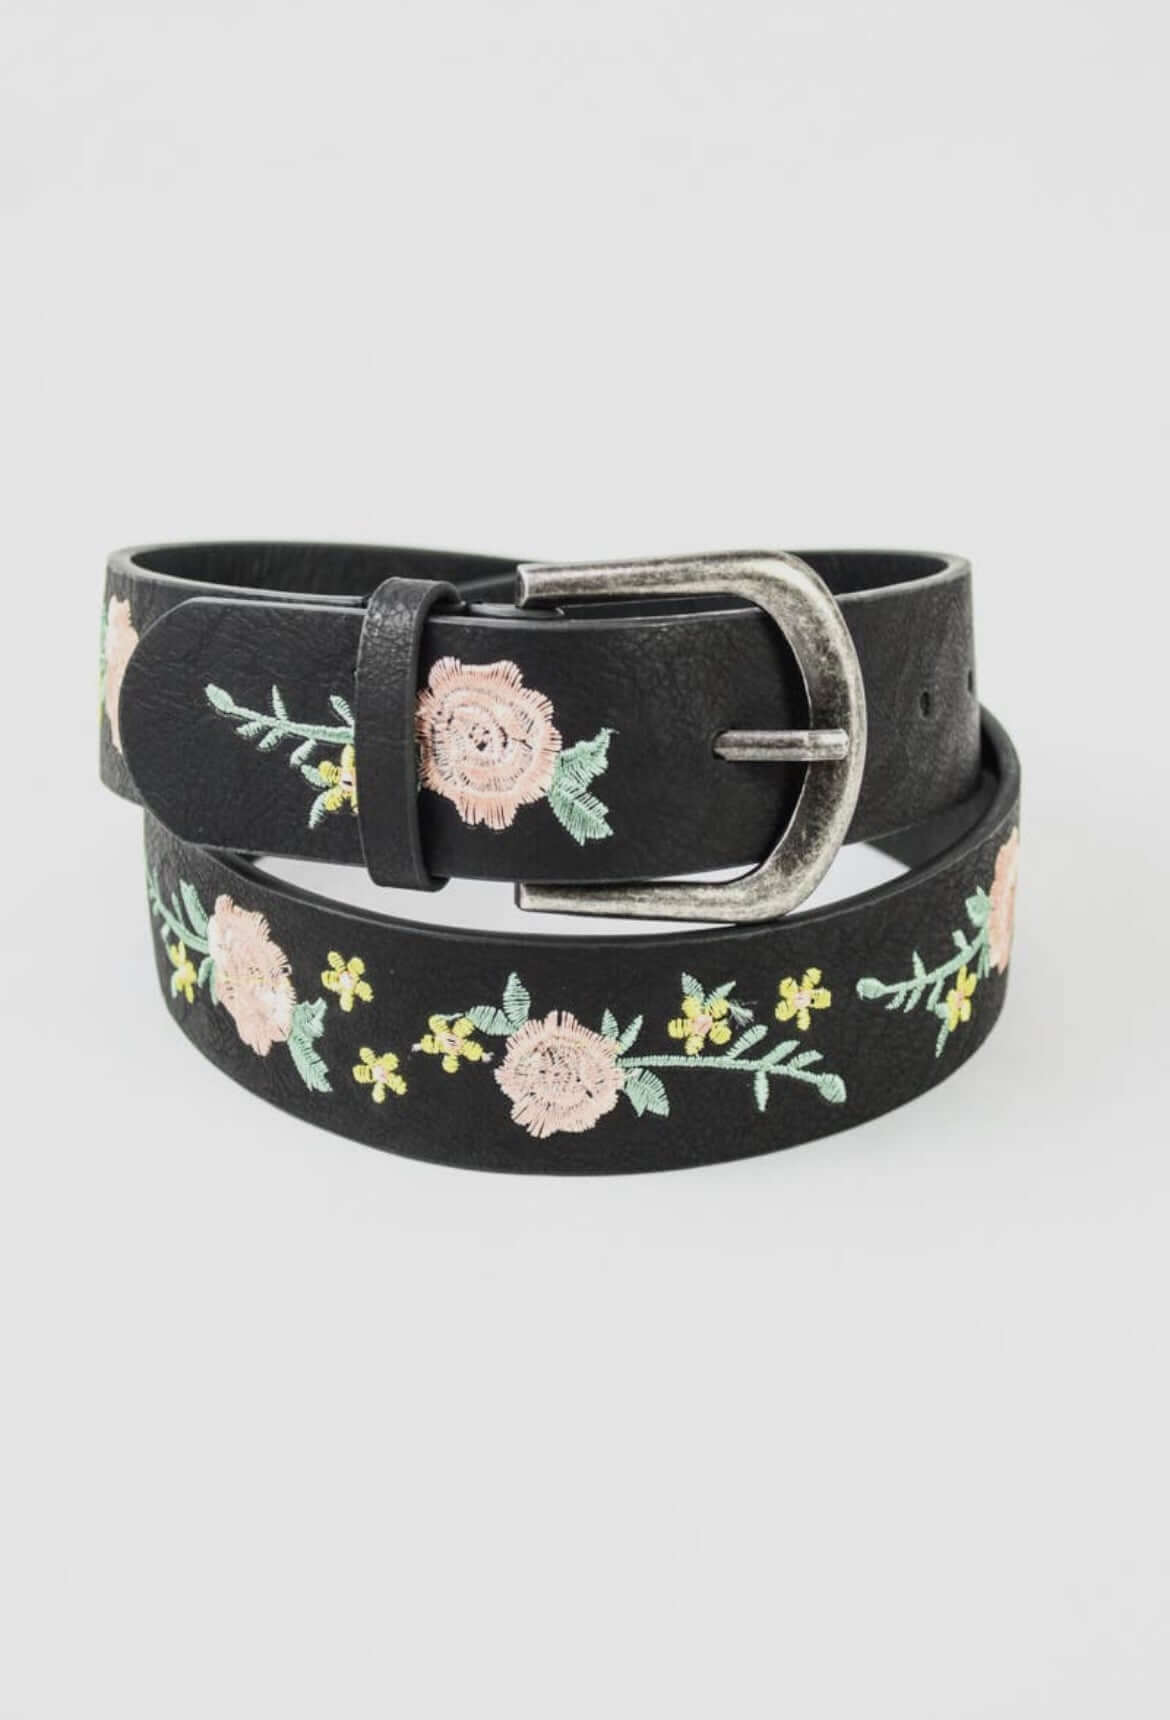 Belts accessories, belts, floral embroidere horse shoe buckle belt, western style belt